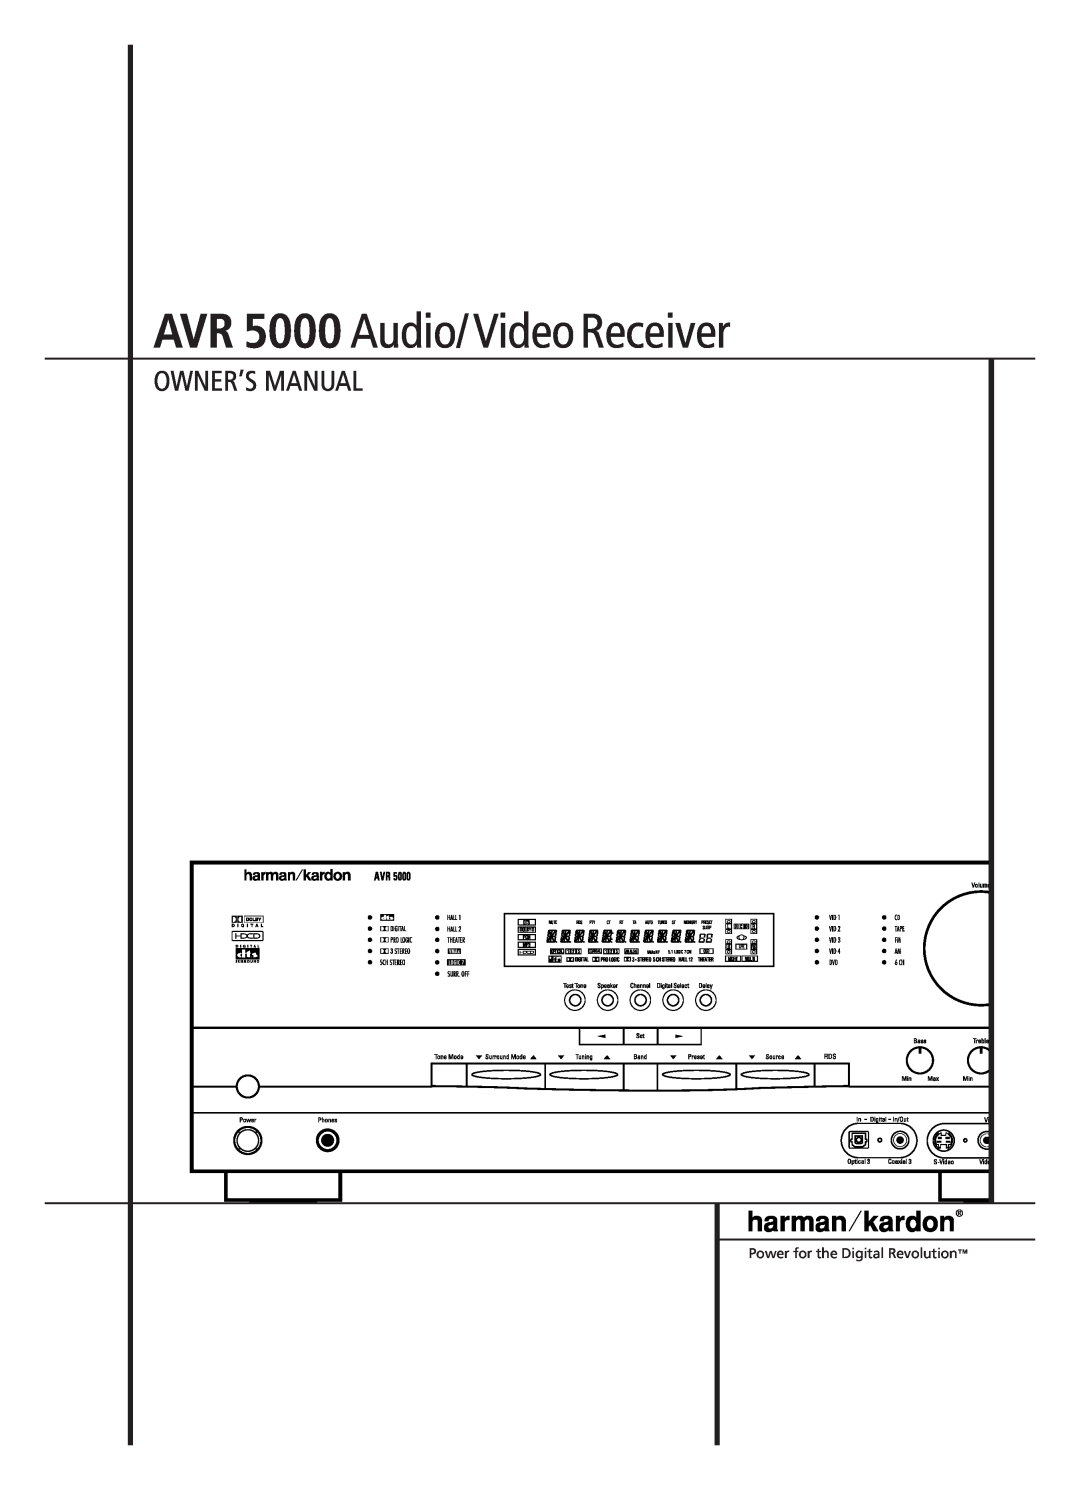 Harman-Kardon owner manual AVR 5000 Audio/ Video Receiver, Mute, VMAx NF, Hall, Theater 